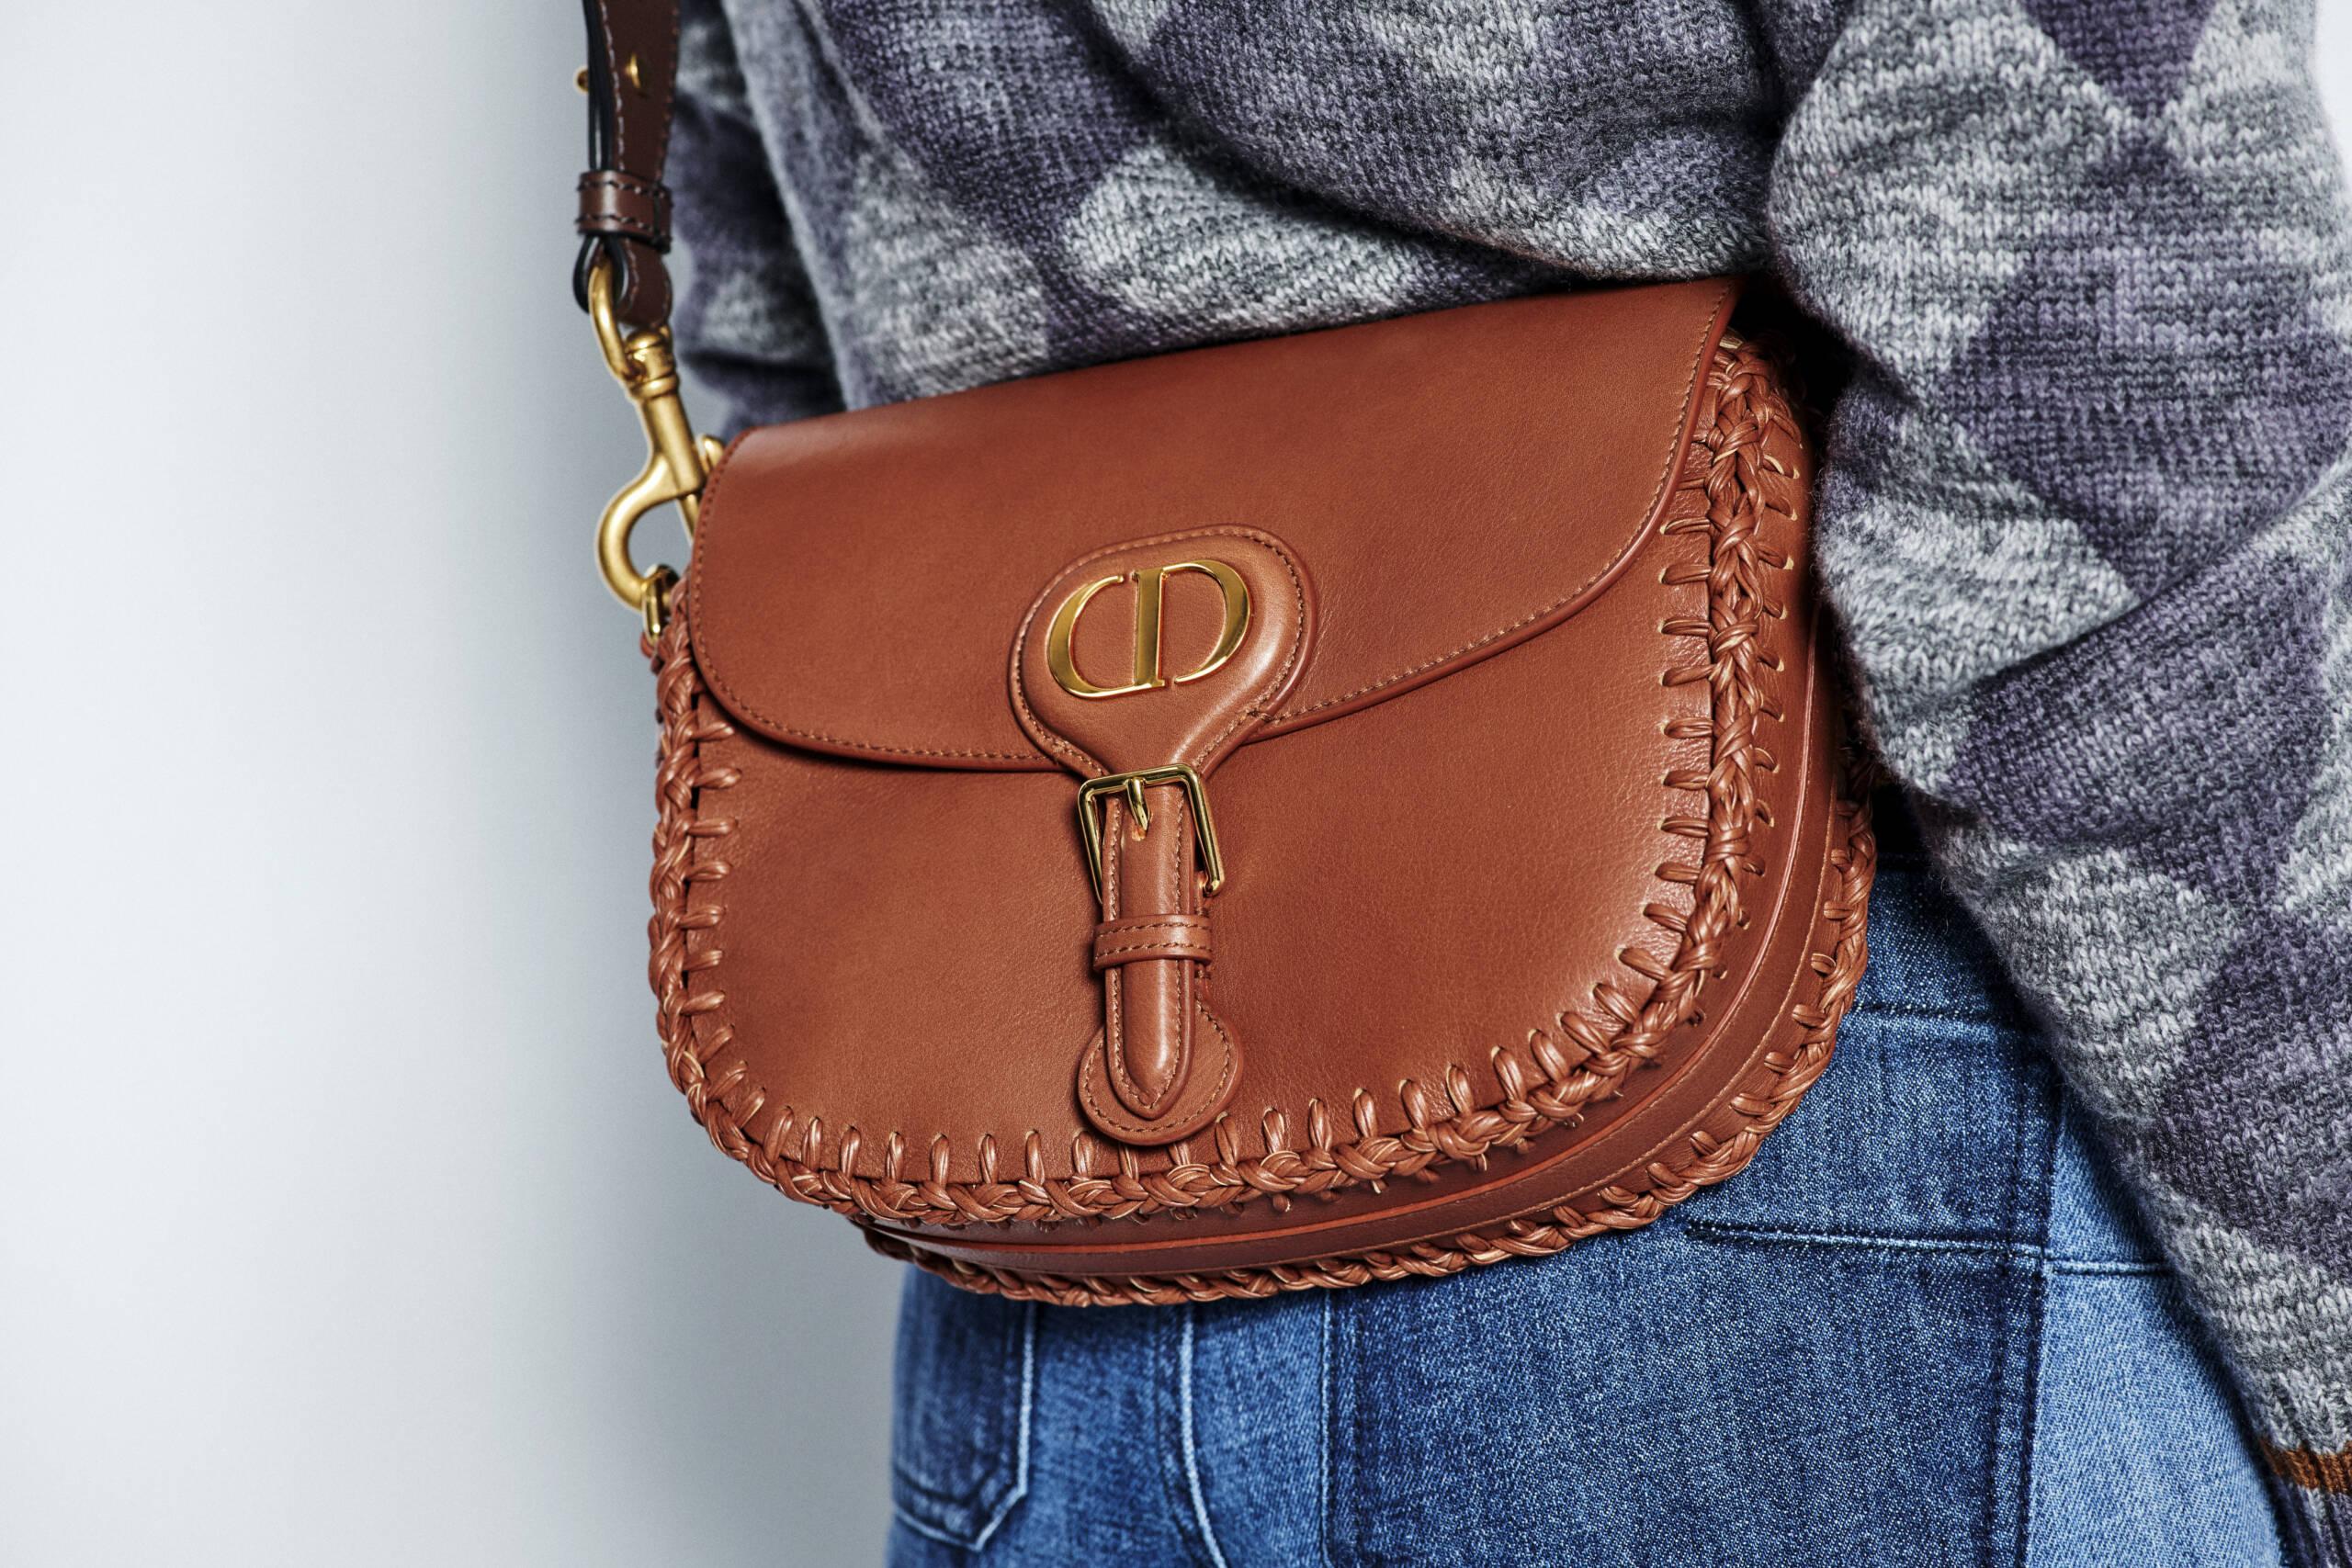 Mini Trend: The New Dior 'Bobby' Bag :: TIG